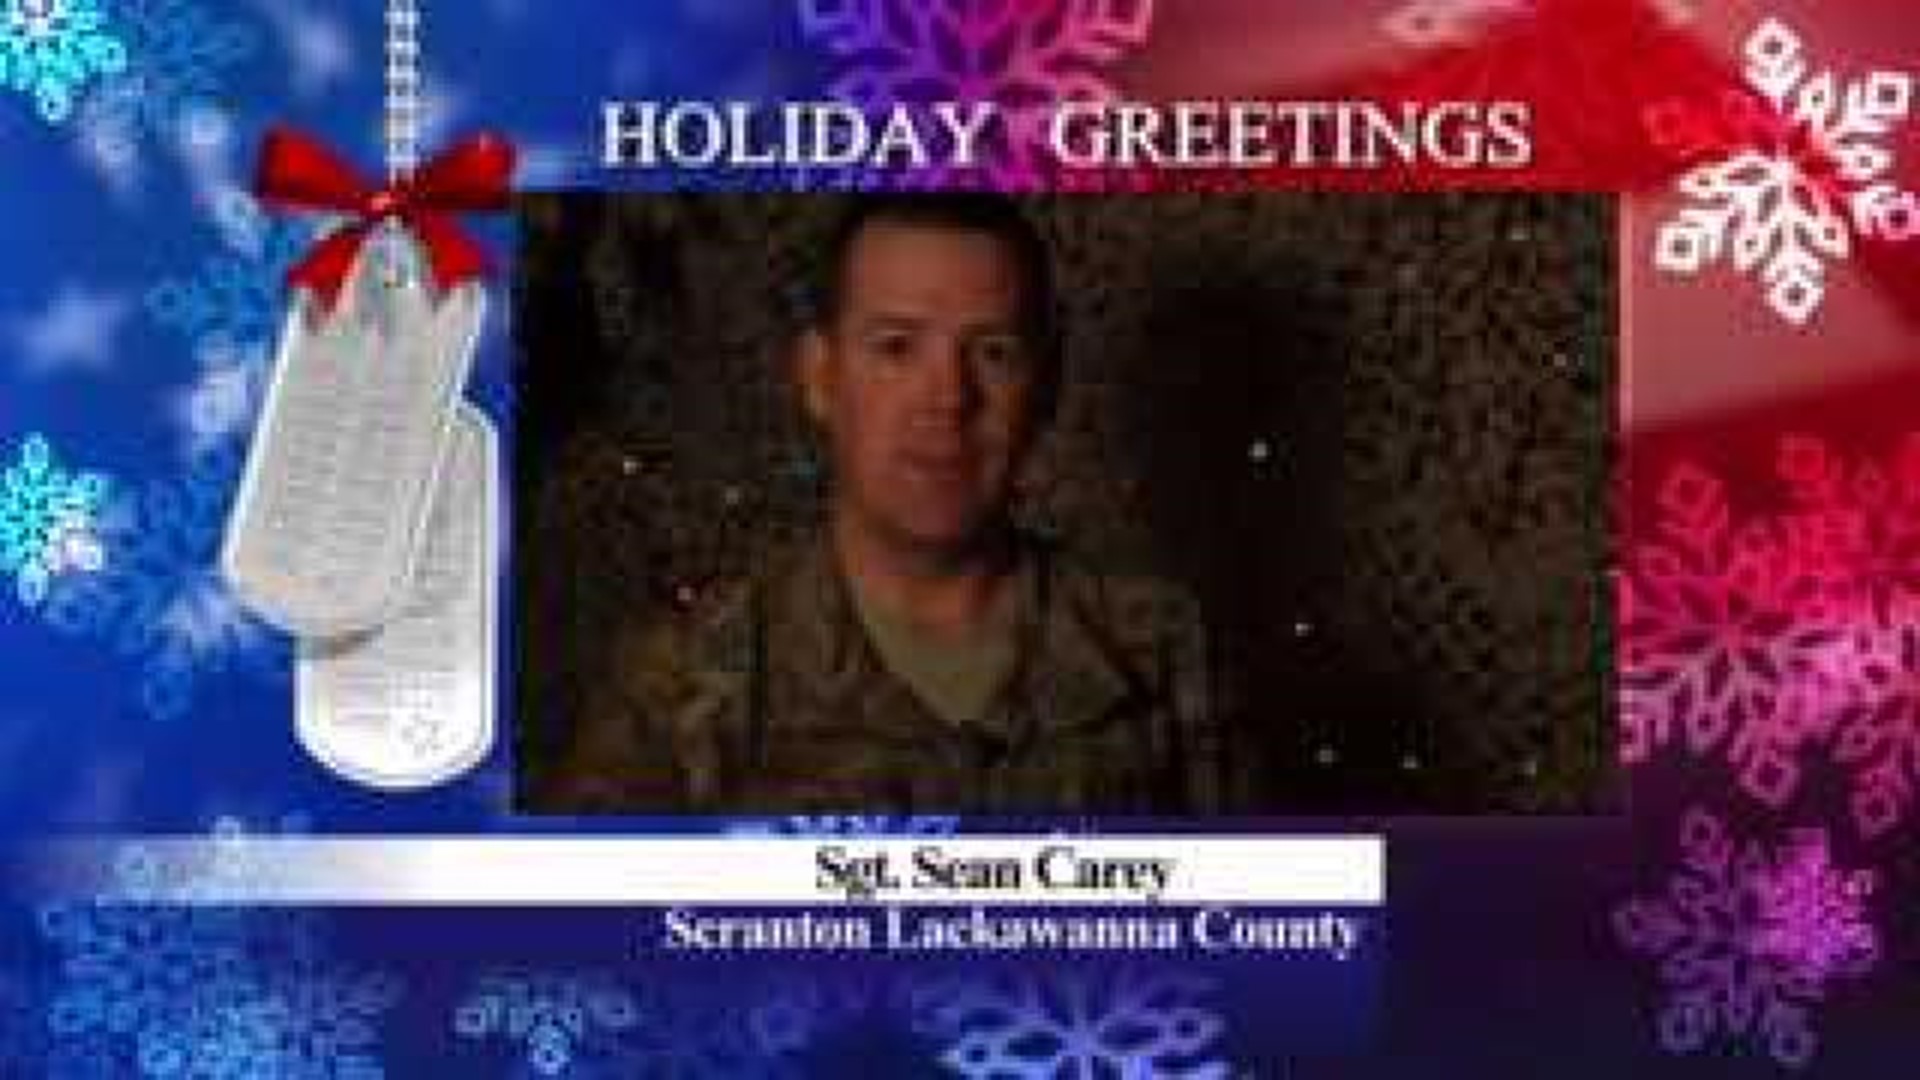 Military Greeting: SGT Sean Carey